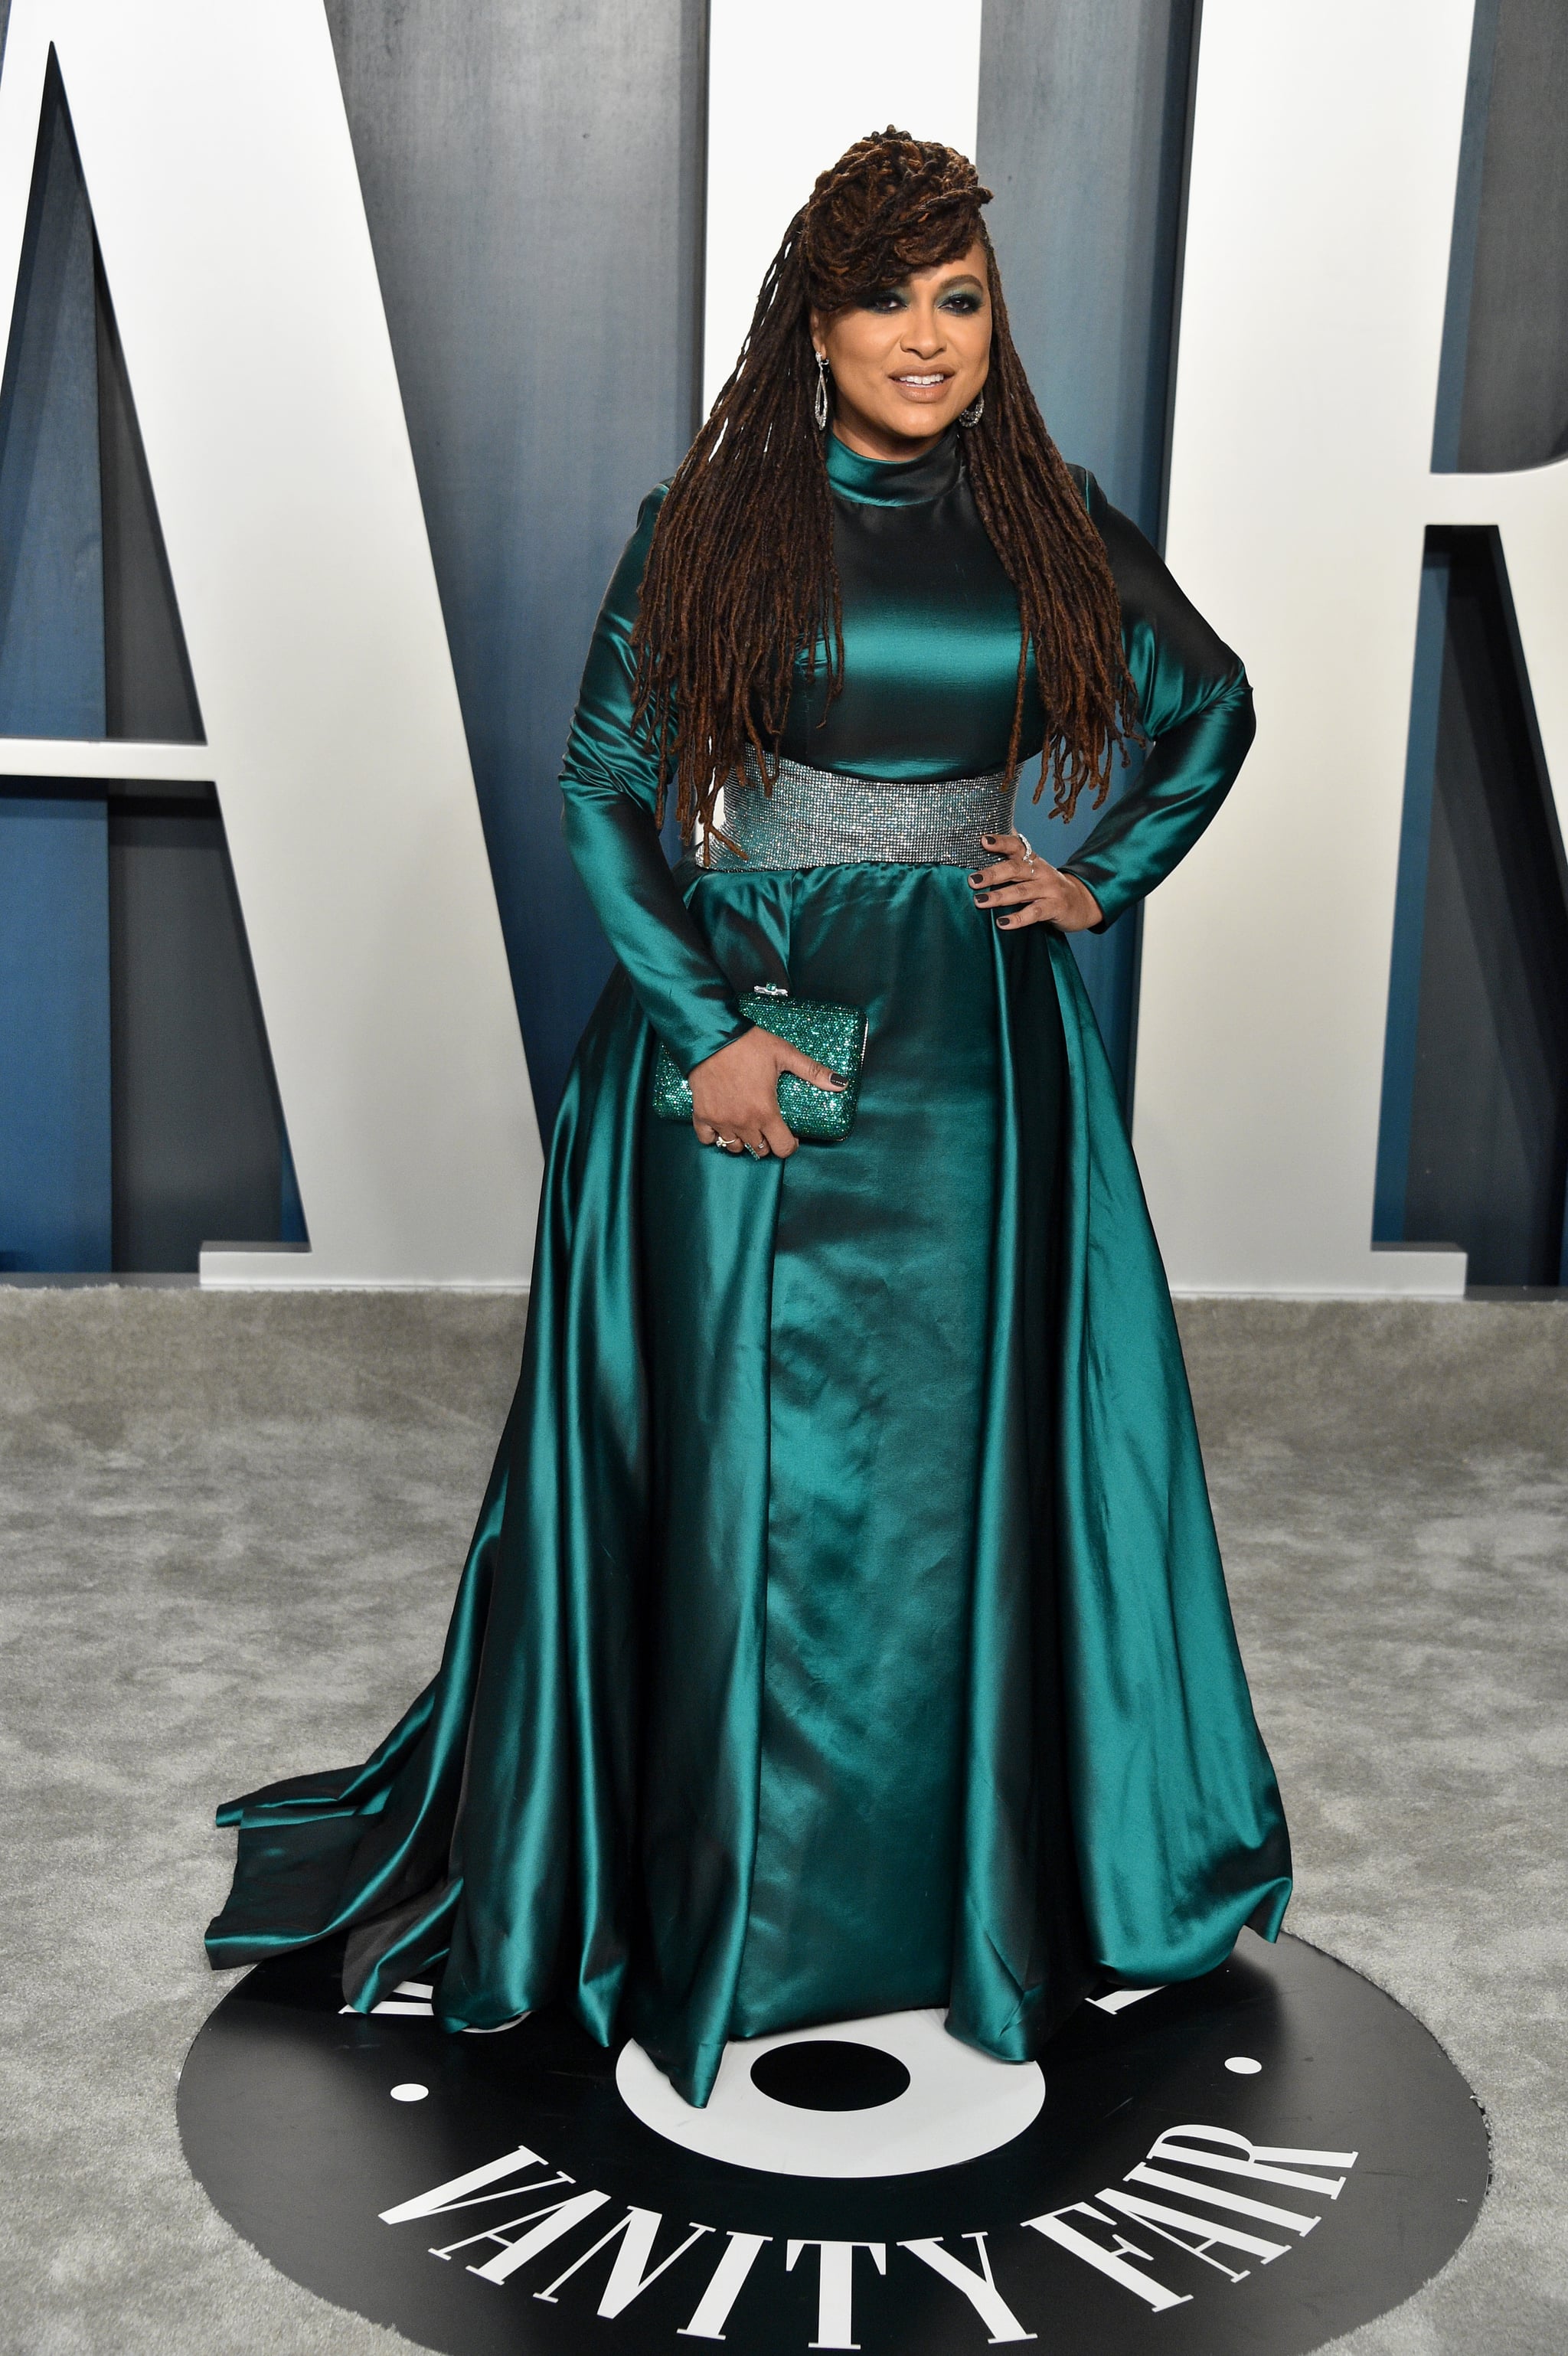 Ava DuVernay at the Vanity Fair Oscars Afterparty 2020